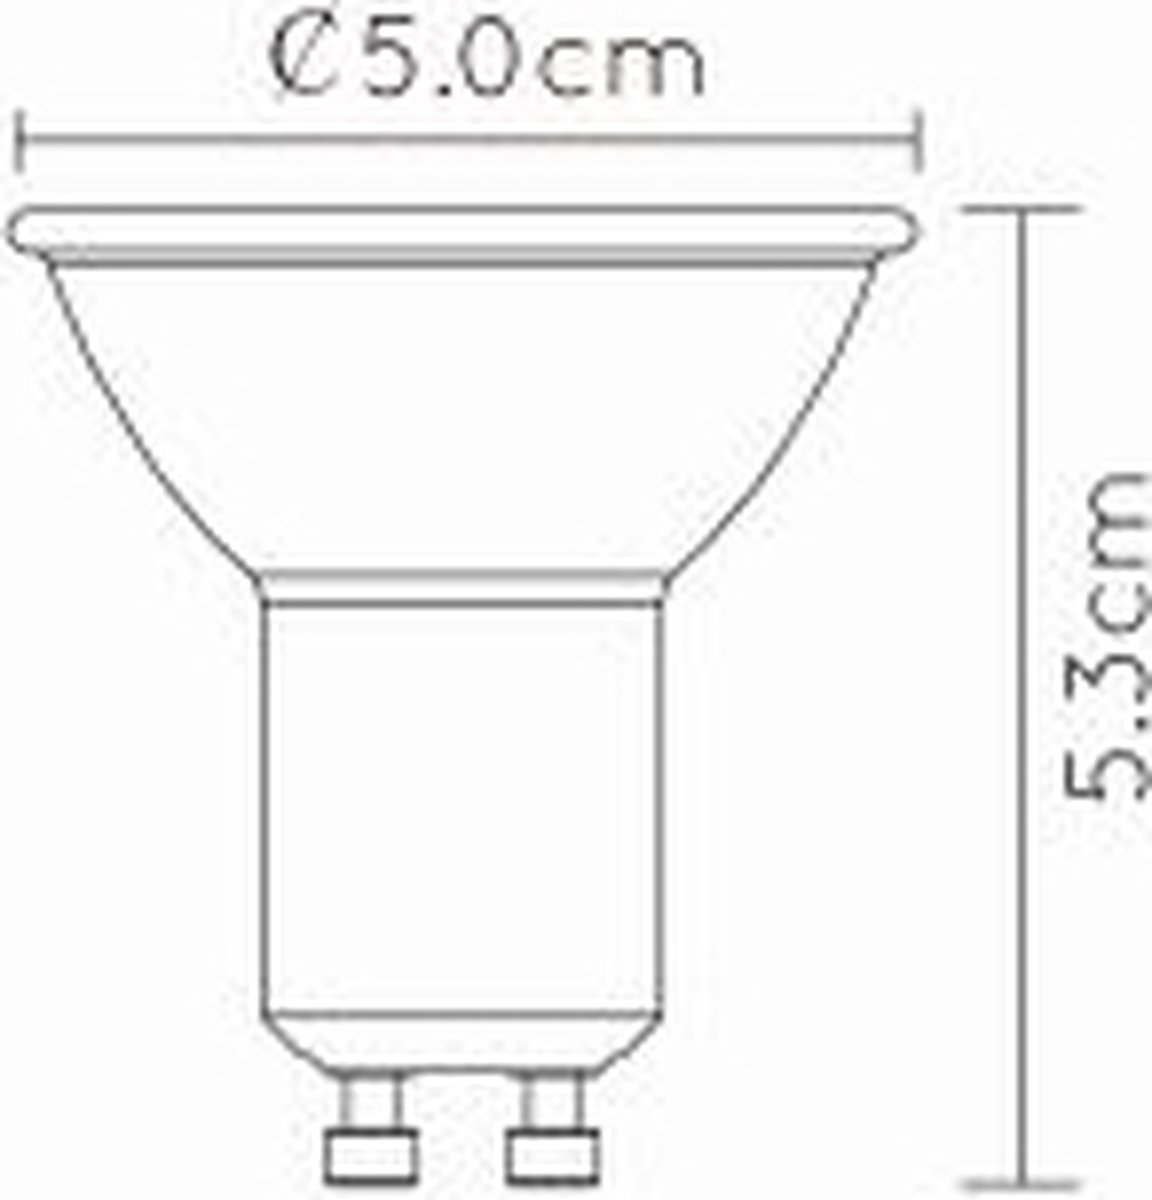 Lucide MR16 - Led Lampe - Ø 5 cm - LED Dim to warm - GU10 - 1x5W  2200K/3000K - Weiß